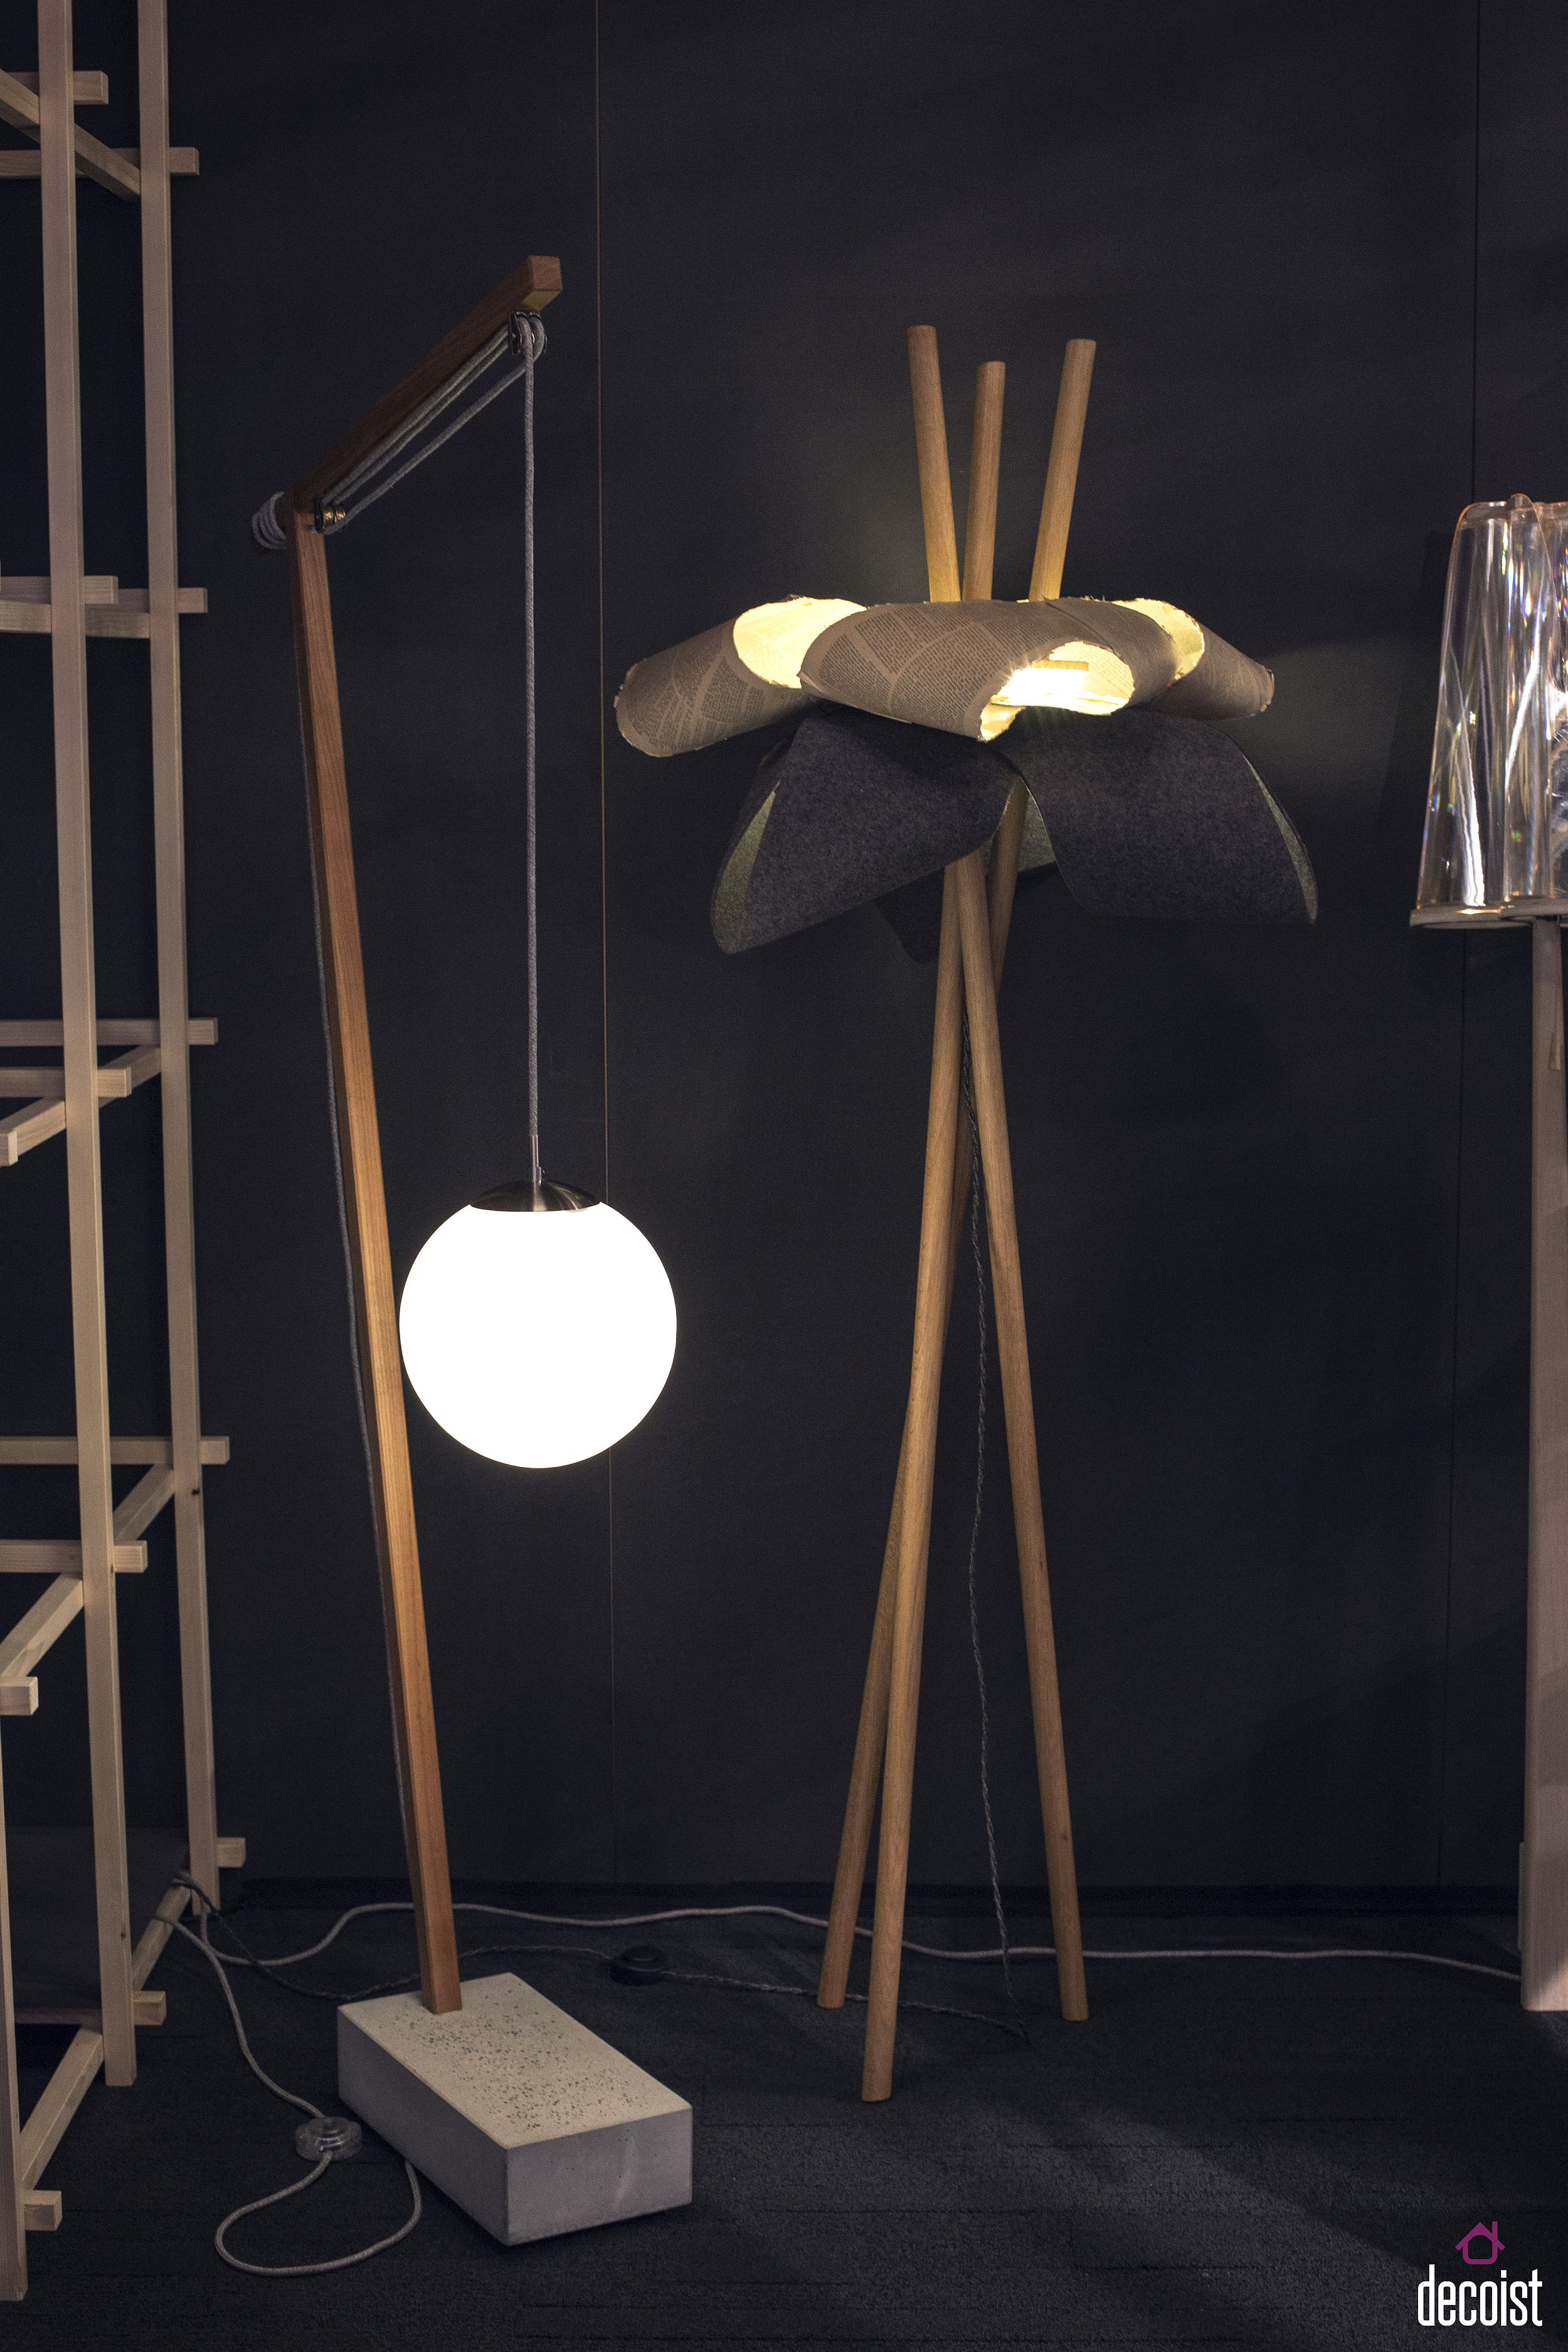 Sleek and gorgeous floor lamp epitomizes modern Scandinavian design